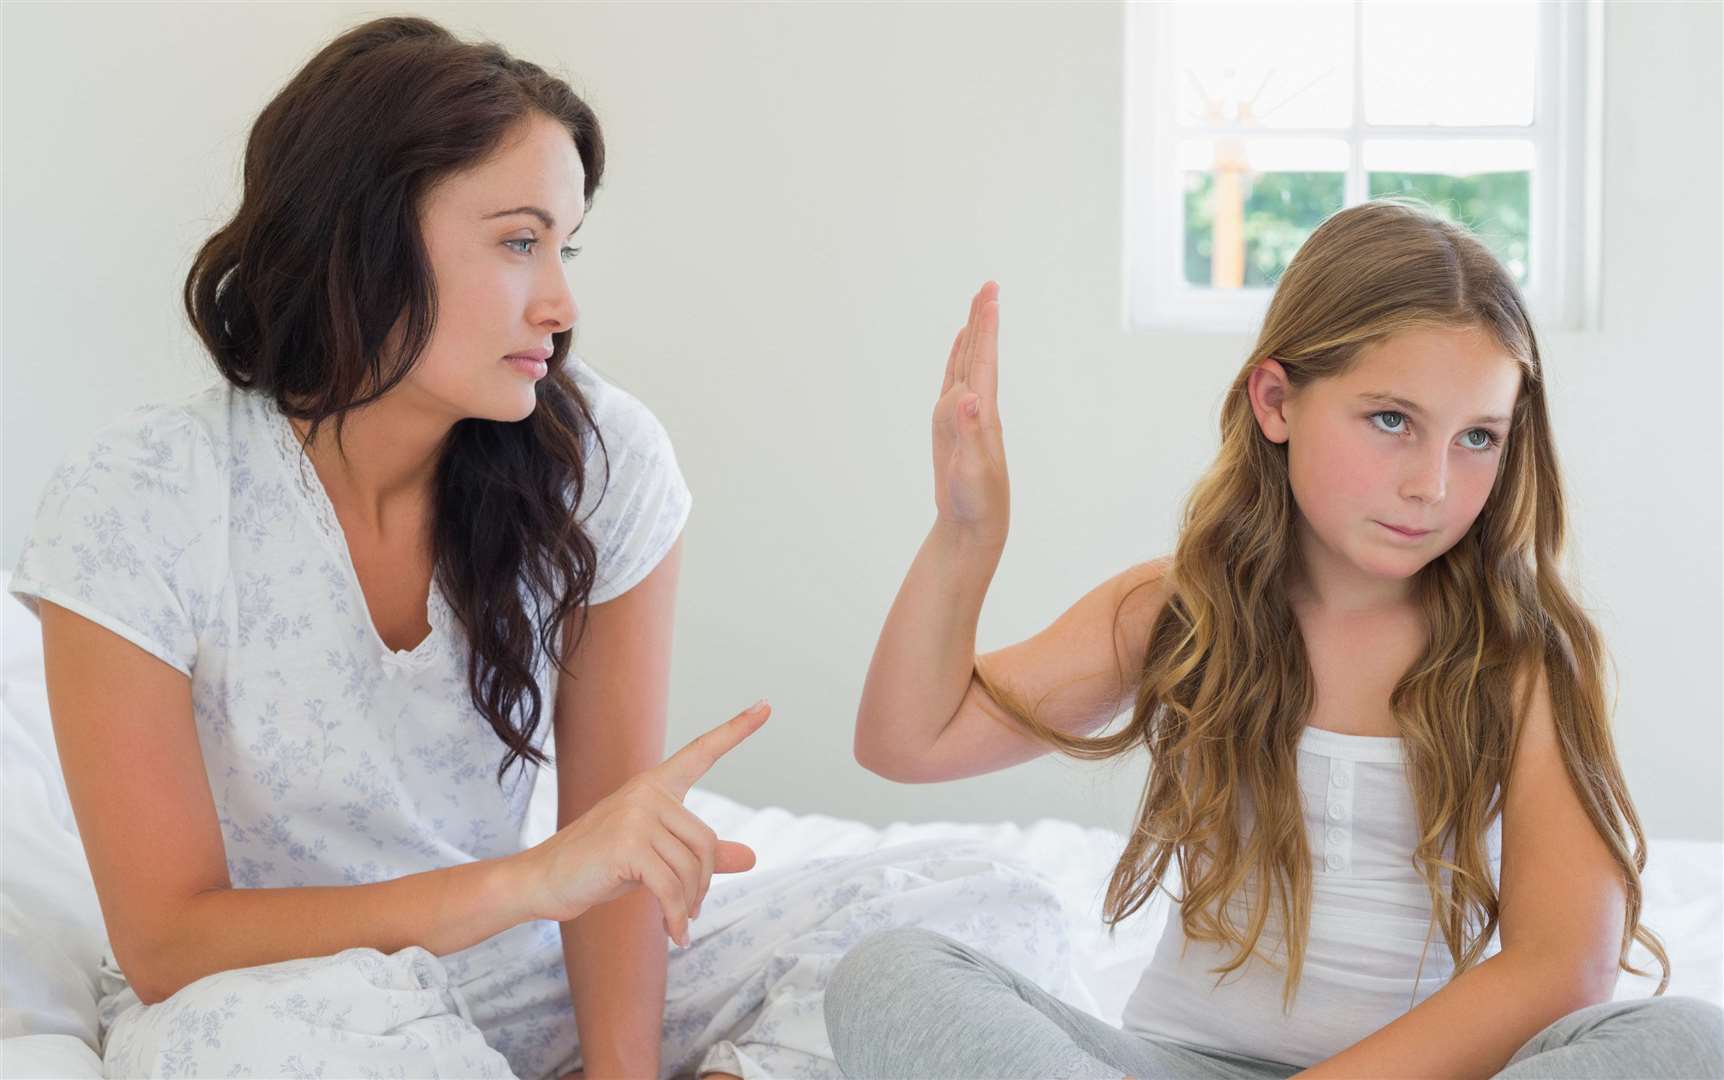 It's normal for parents to get upset when children aren't listening